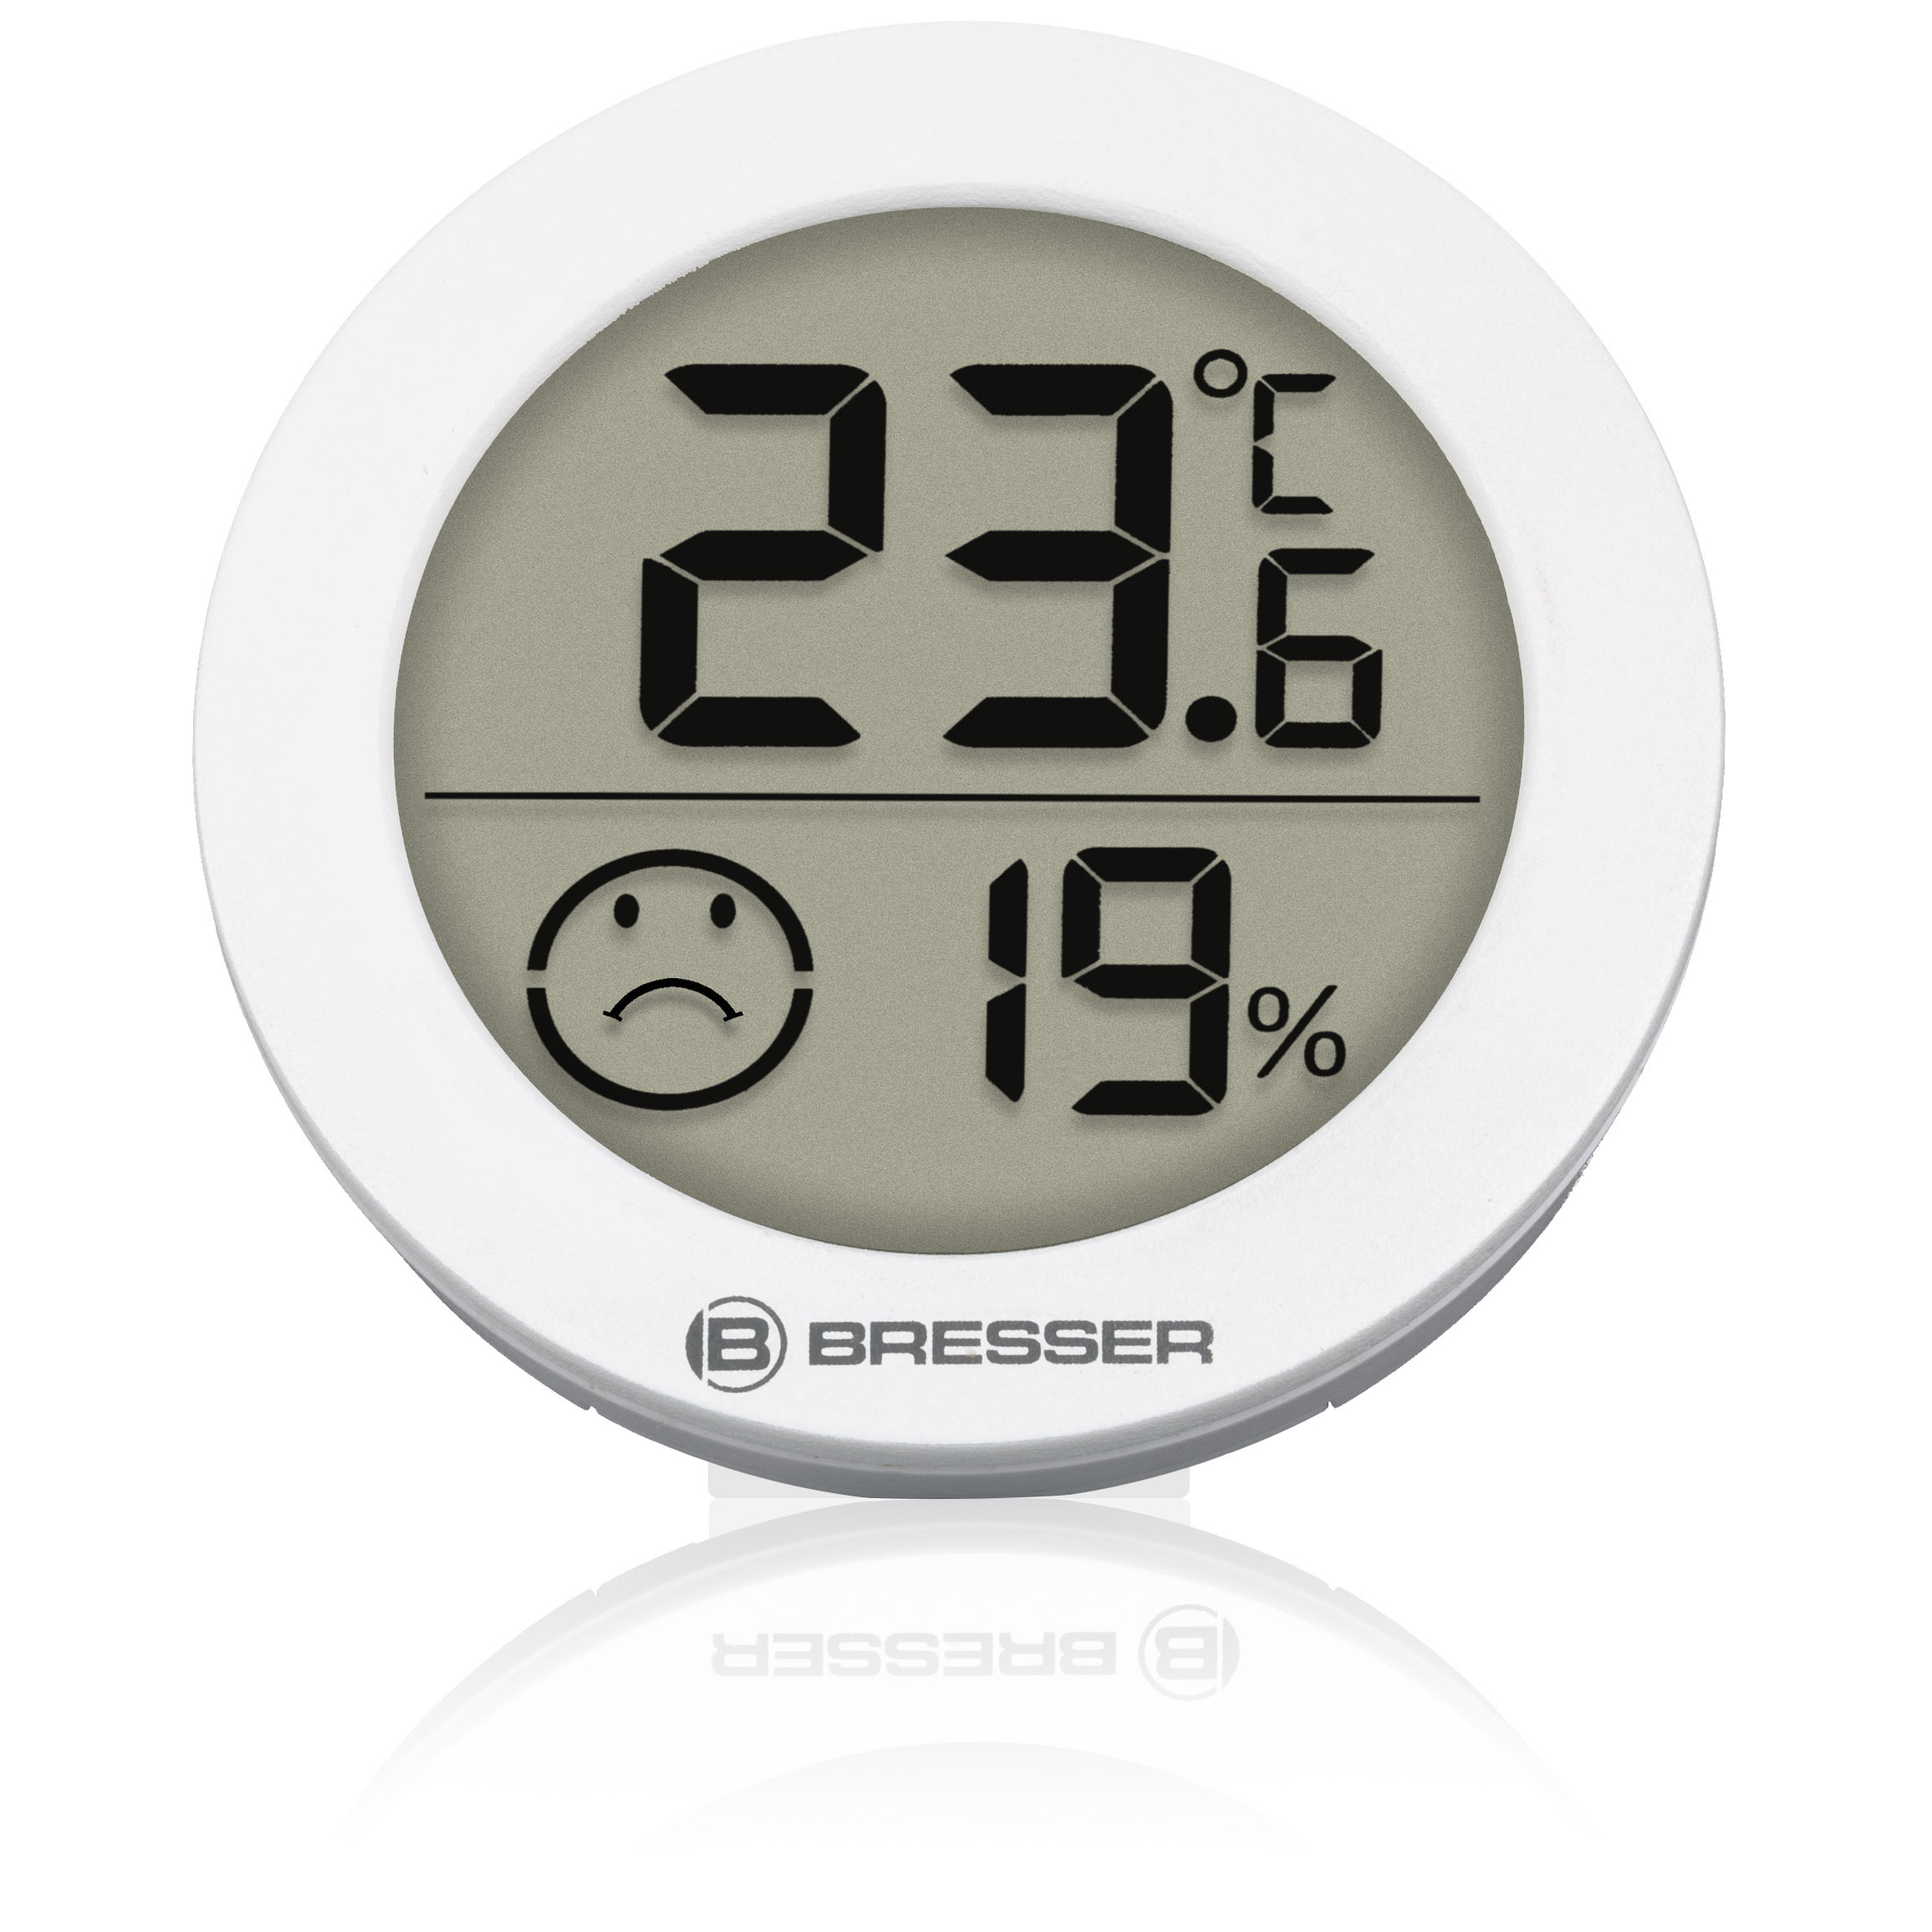 BRESSER Smile thermo-hygrometer, set of 5